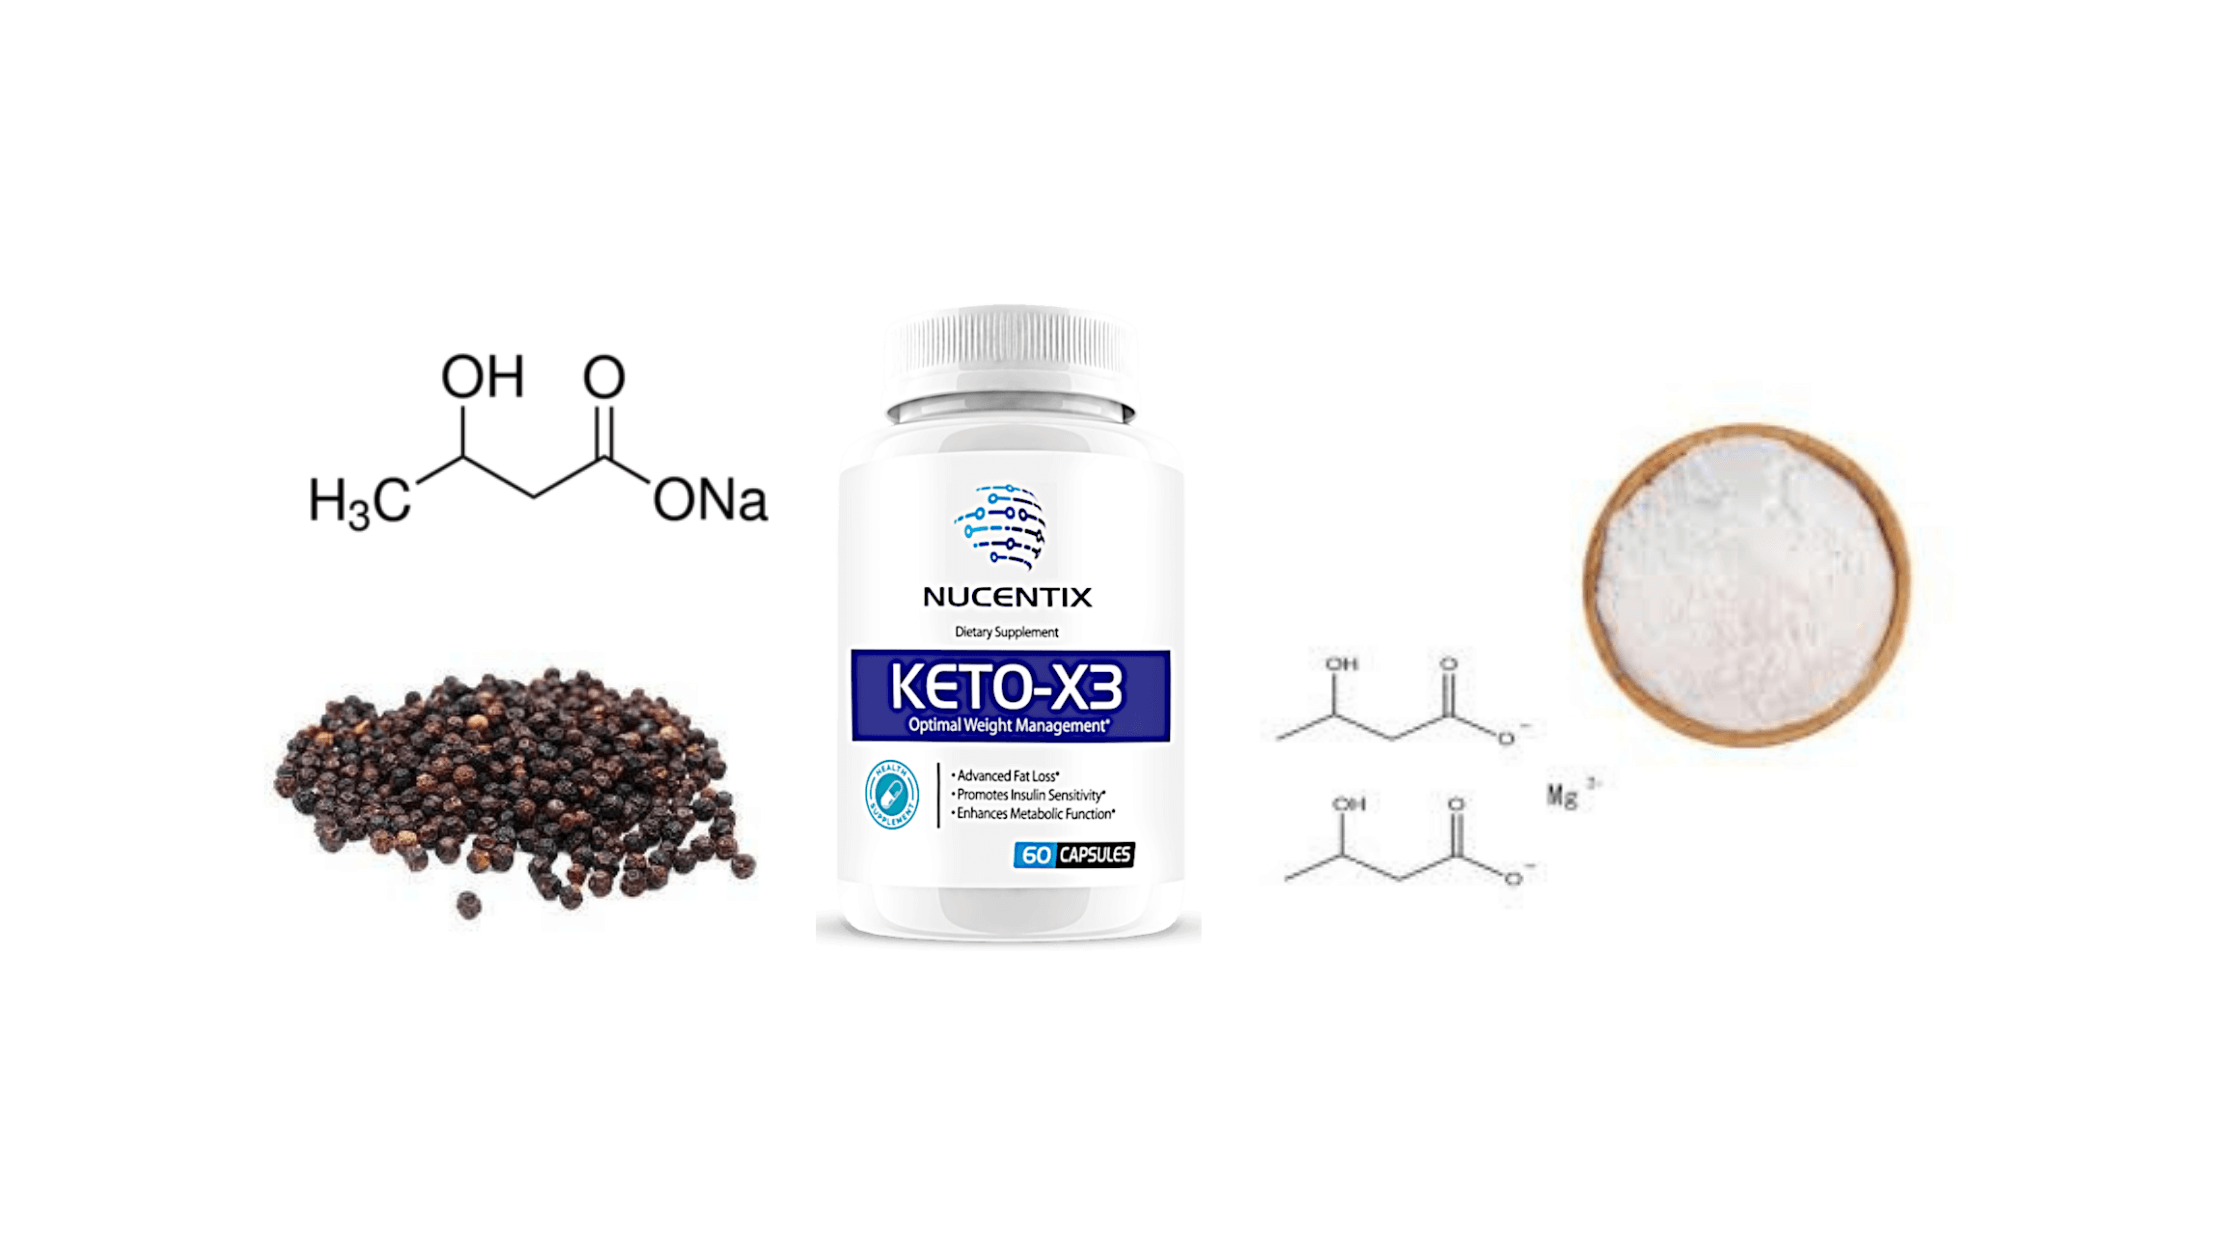 Nucentix Keto-X3 Ingredients